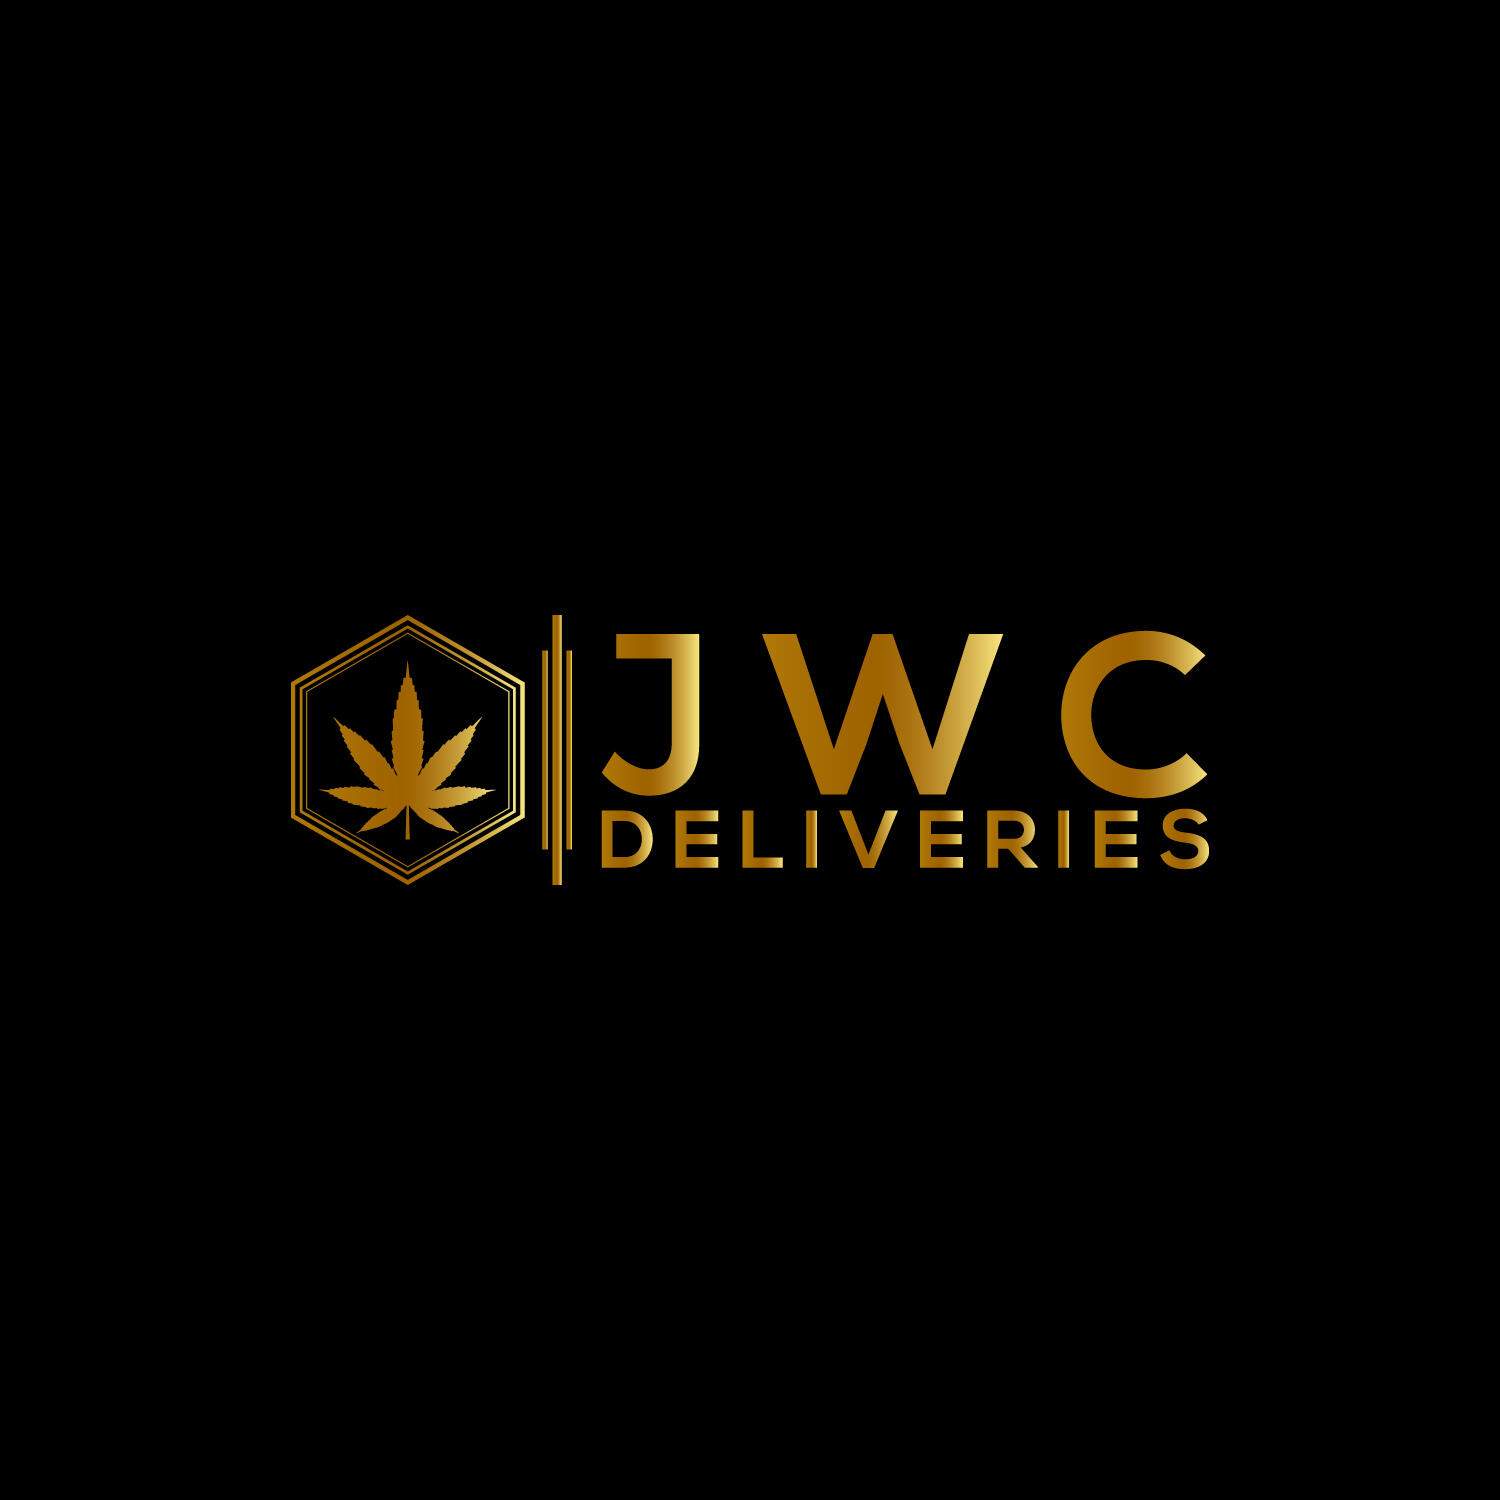 JWC Deliveries